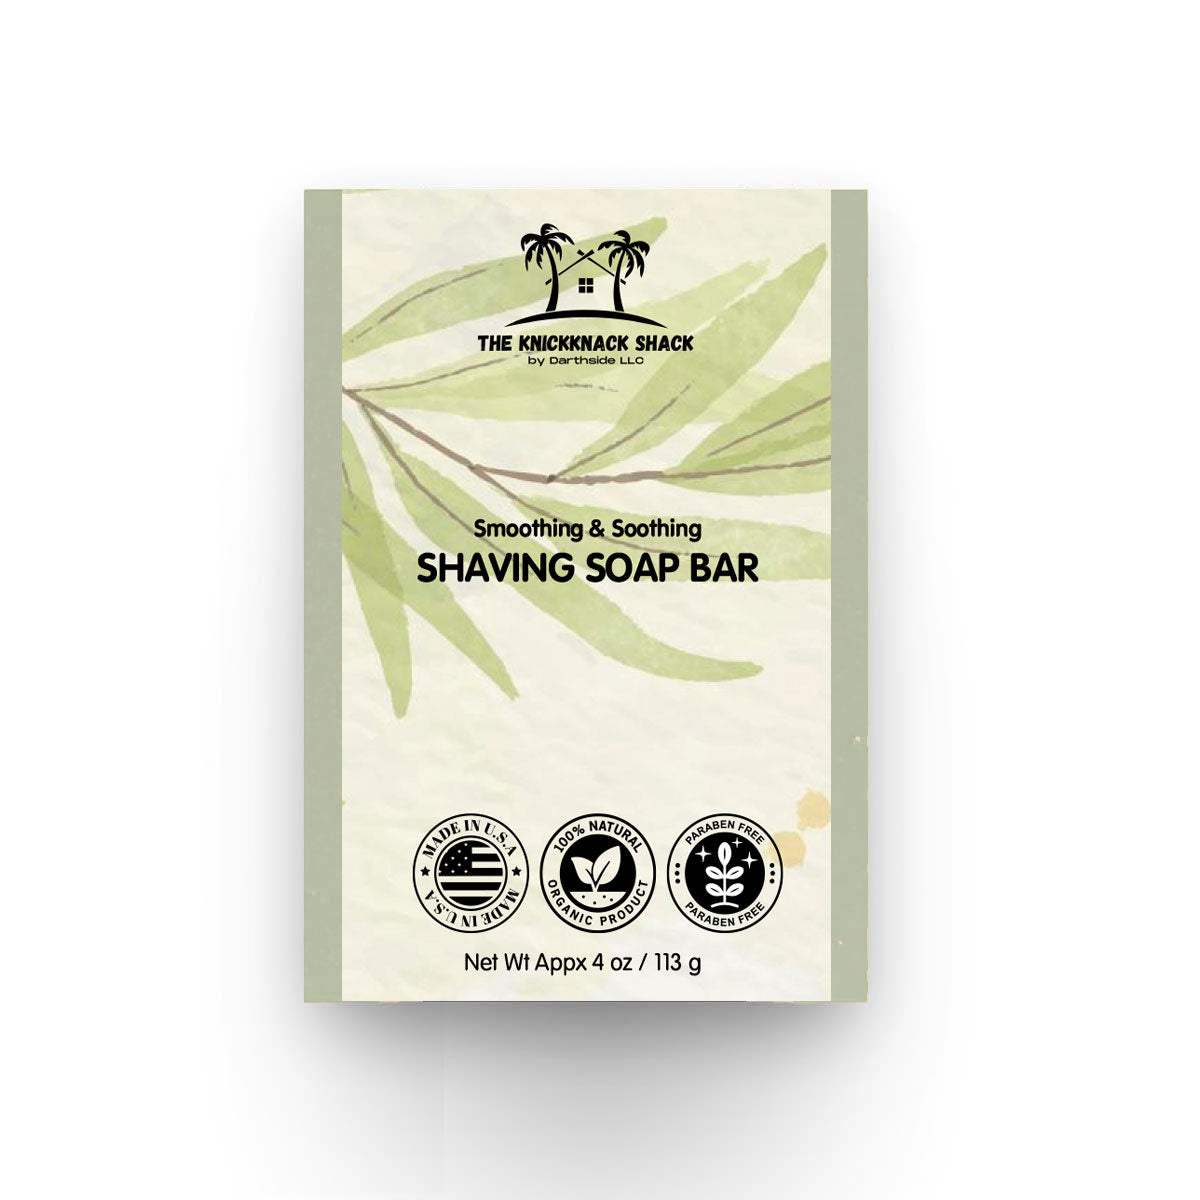 Smoothing & Soothing Shaving Soap Bar